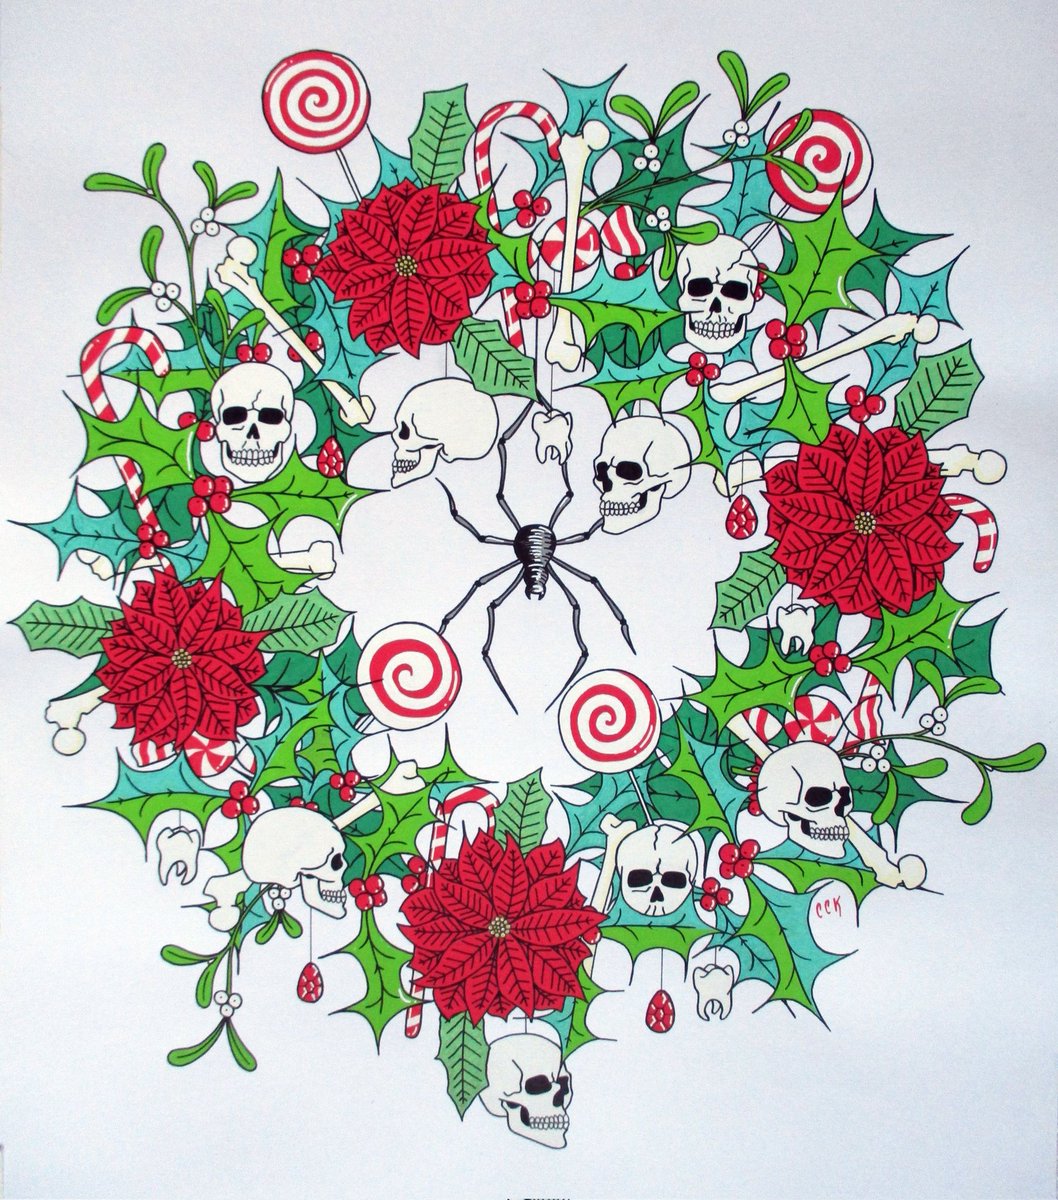 #Creepmas #Wreath - #Posca #Drawing on apx A2 paper
#art #artist #artwork #independentartist #christmas #gothmas #gothicchristmas #gothicwreath #holly #mistletoe #pointsettia #skulls #bones #horror #spider #candy #altchristmas #candycanes #poscapens #festiveart #illustration